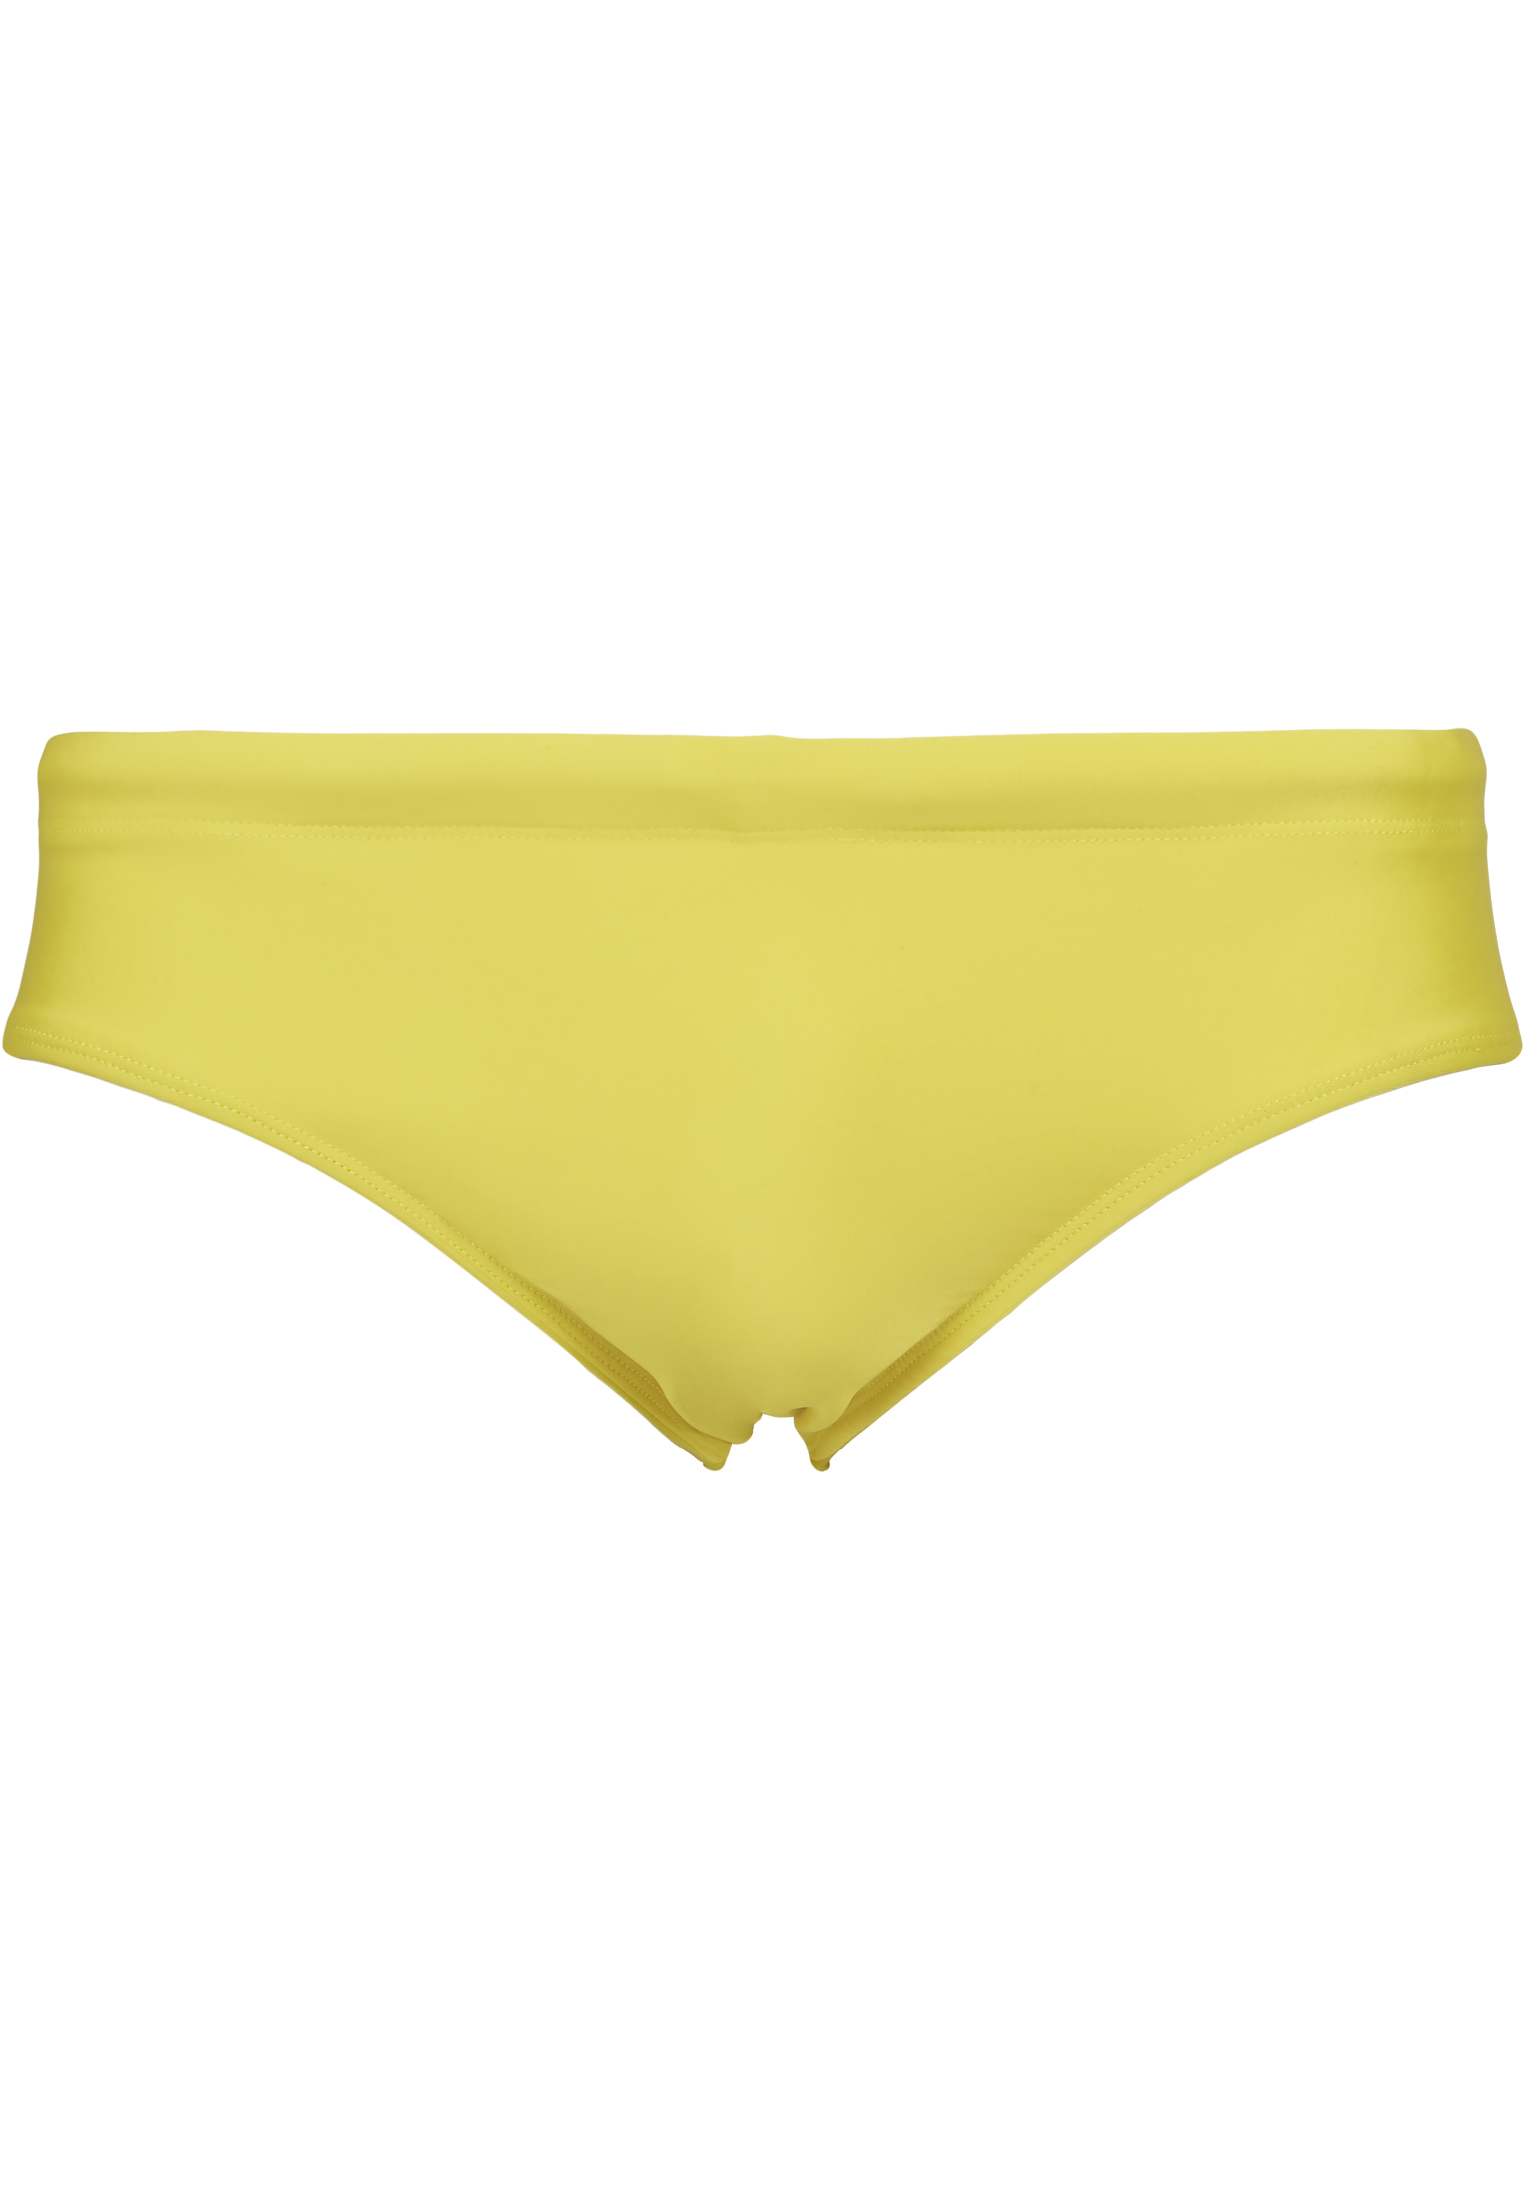 Bademode Basic Swim Brief in Farbe brightyellow